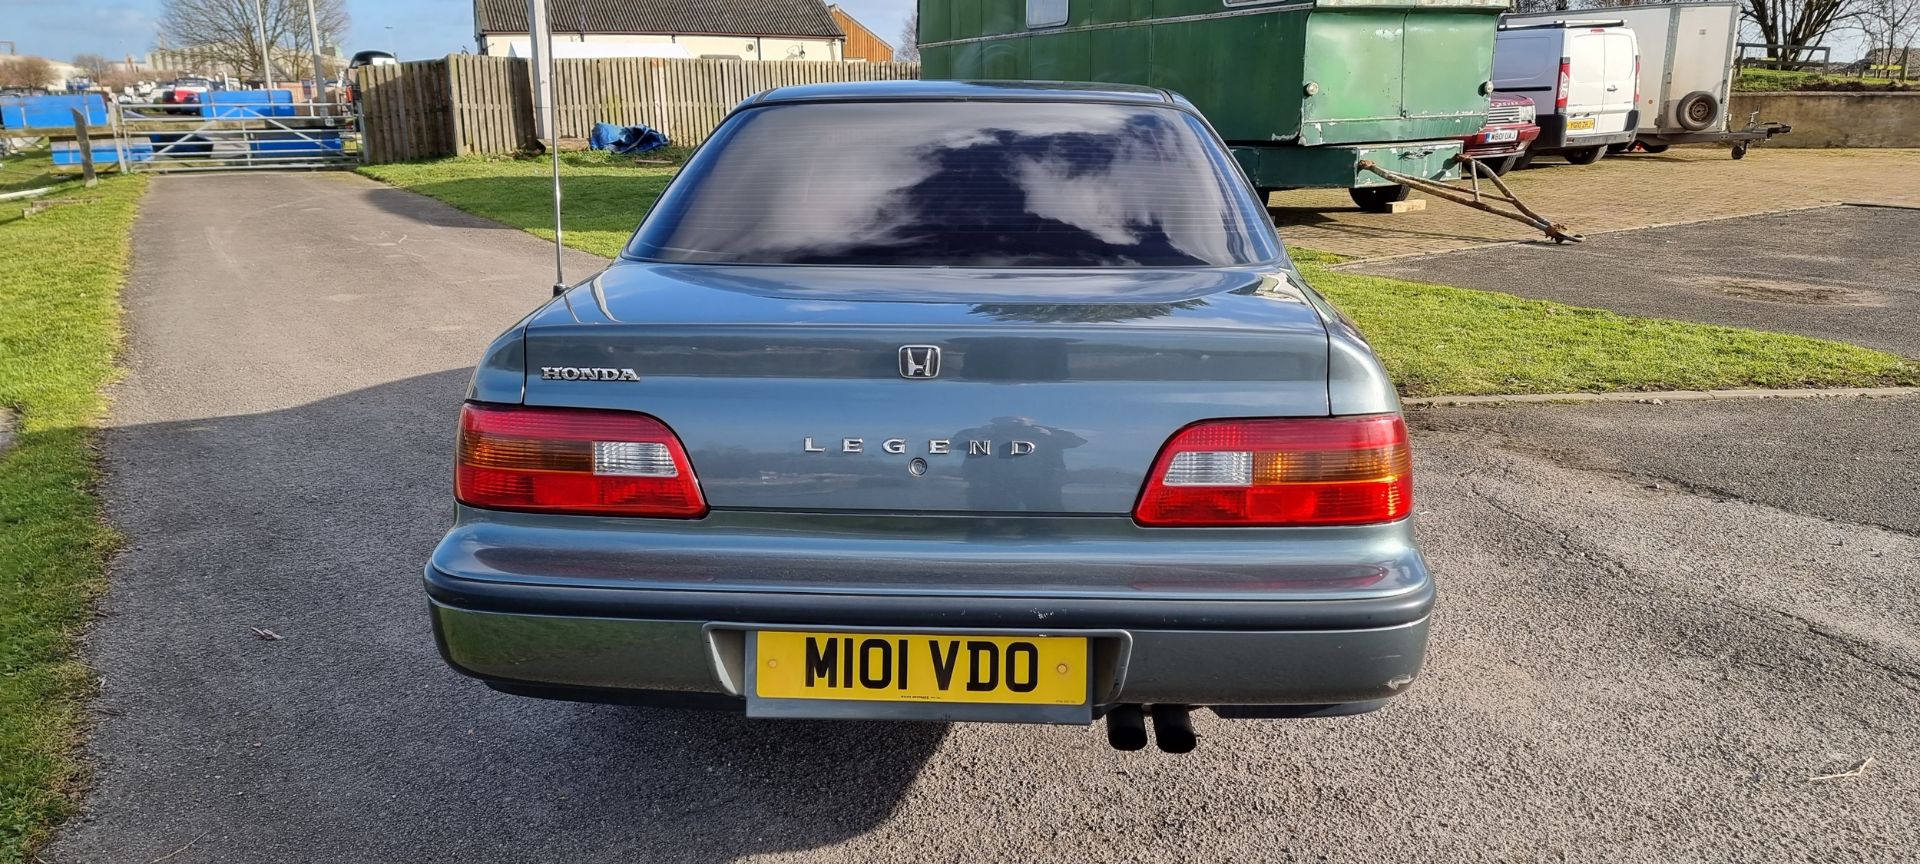 1994 Honda Legend automatic, 3,206cc. Registration number M101 VDO. Chassis number - Image 8 of 19